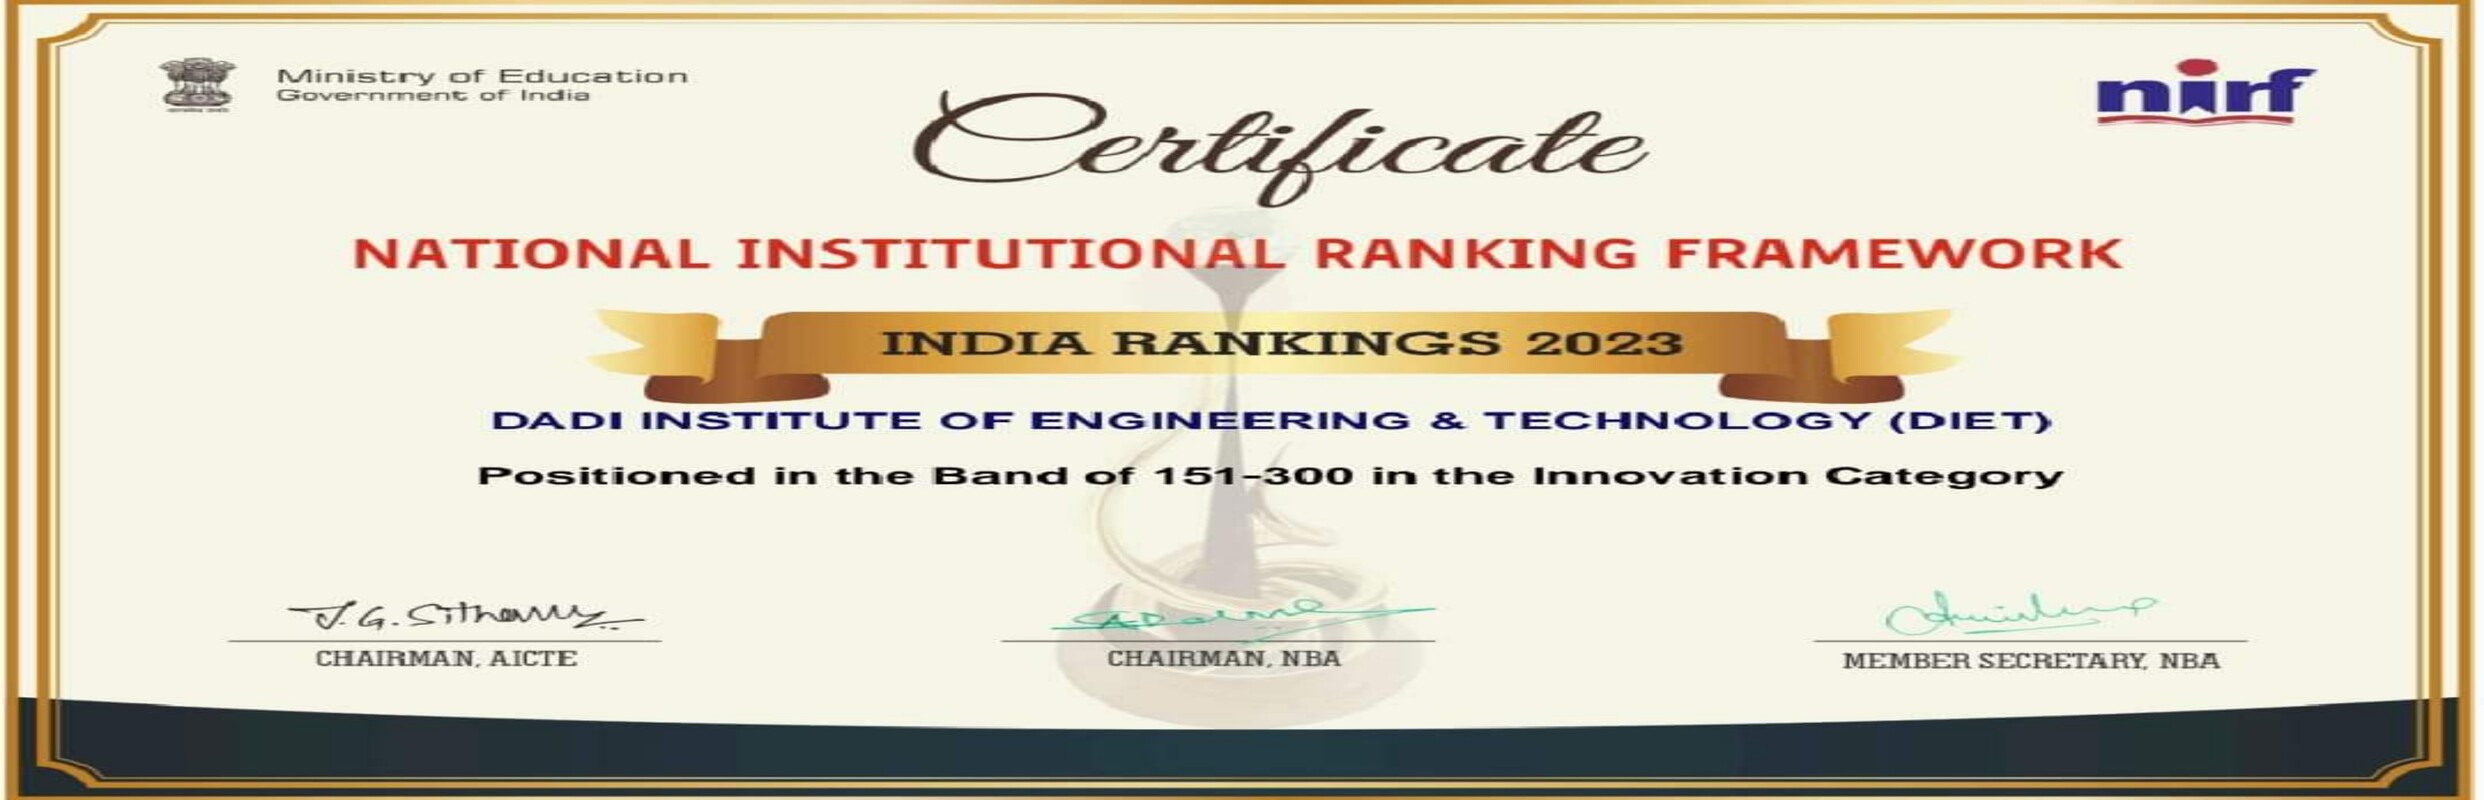 Dadi Institute of Engineering & Technology